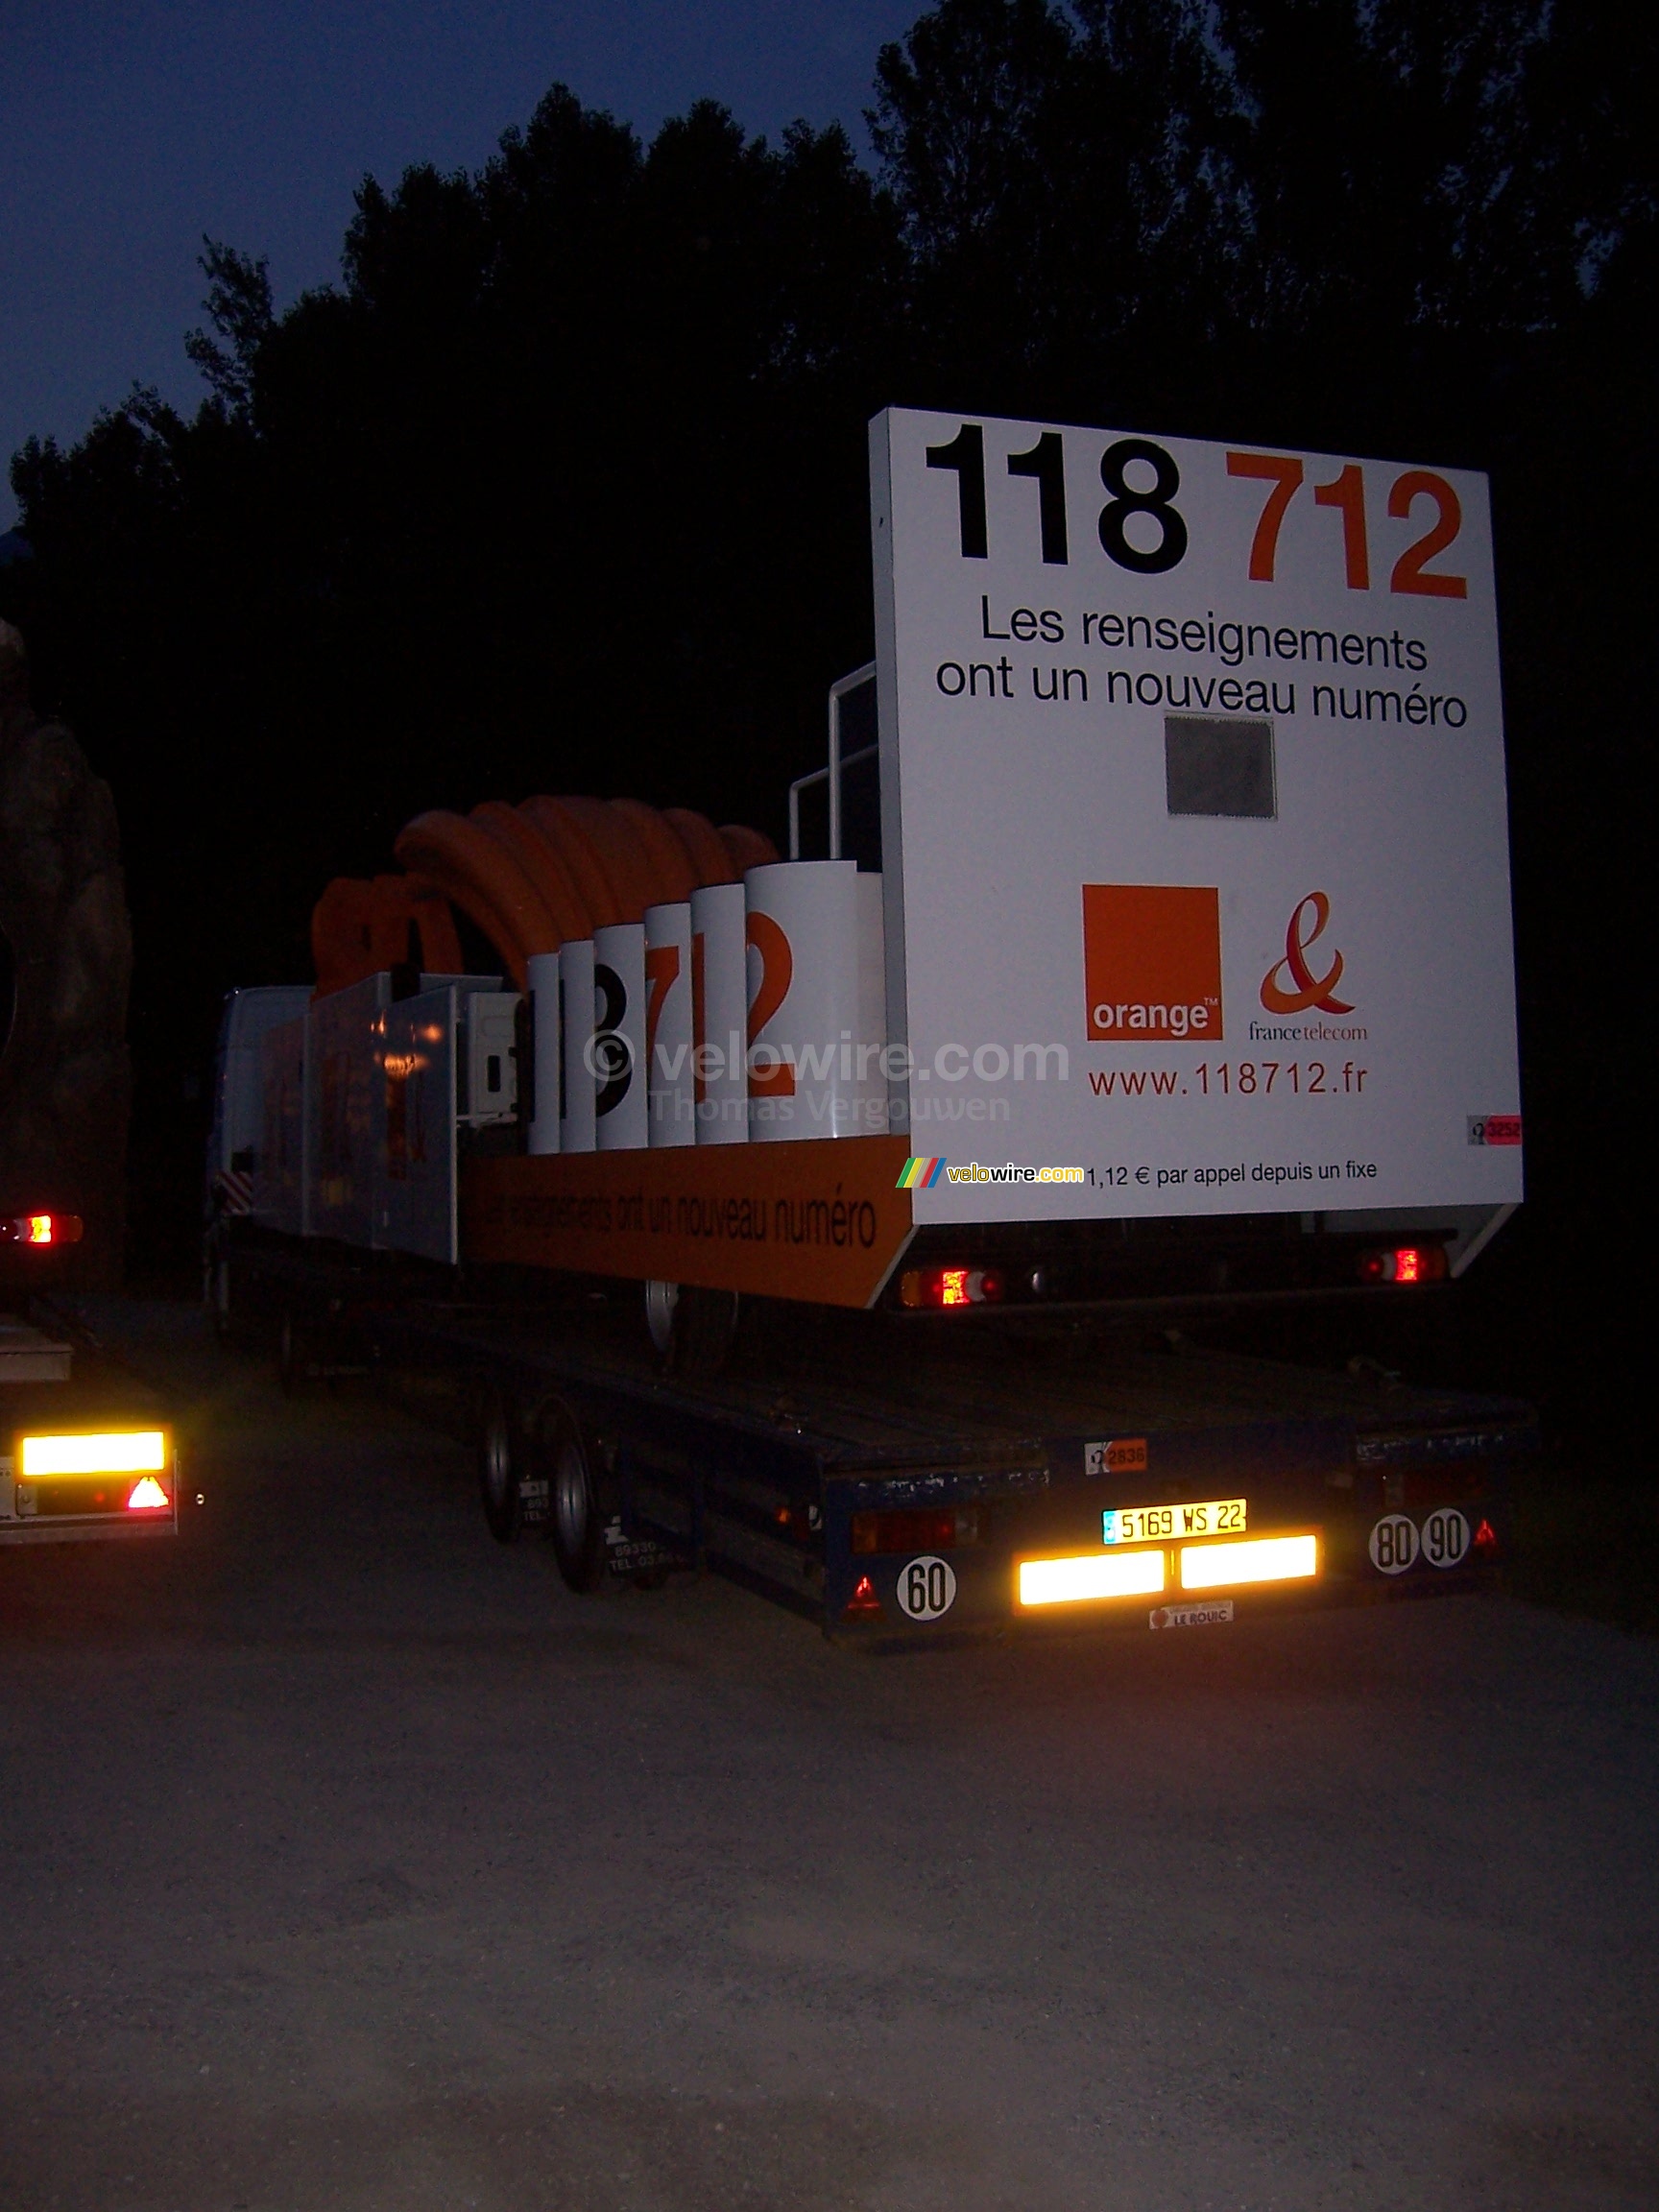 The 118 712 caravane of France Telecom / Orange on their truck